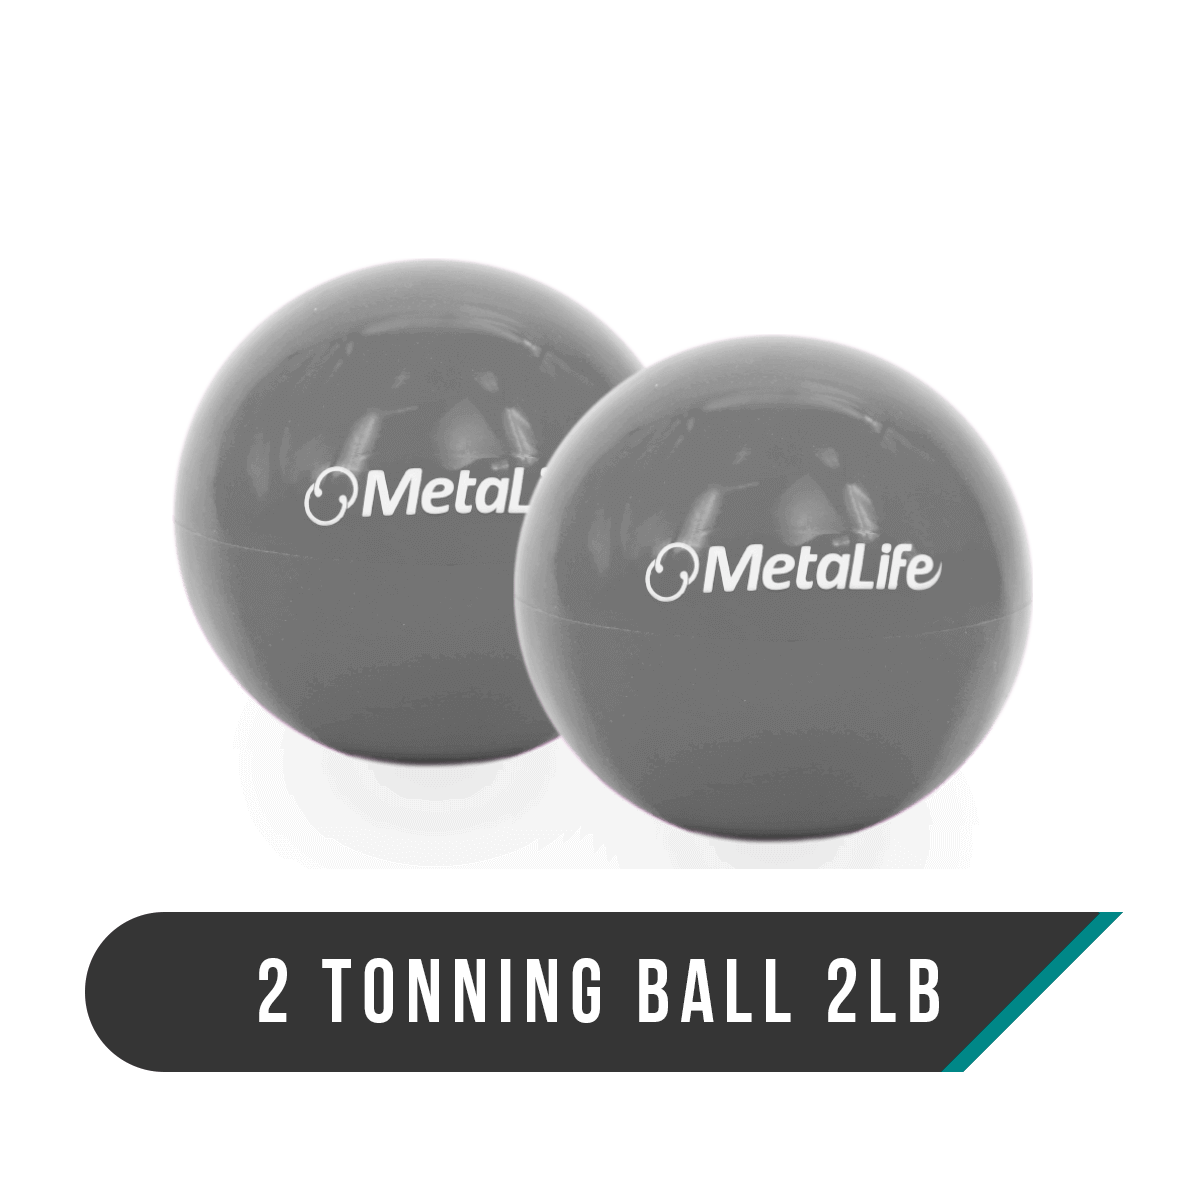 Tonning Ball 2LB